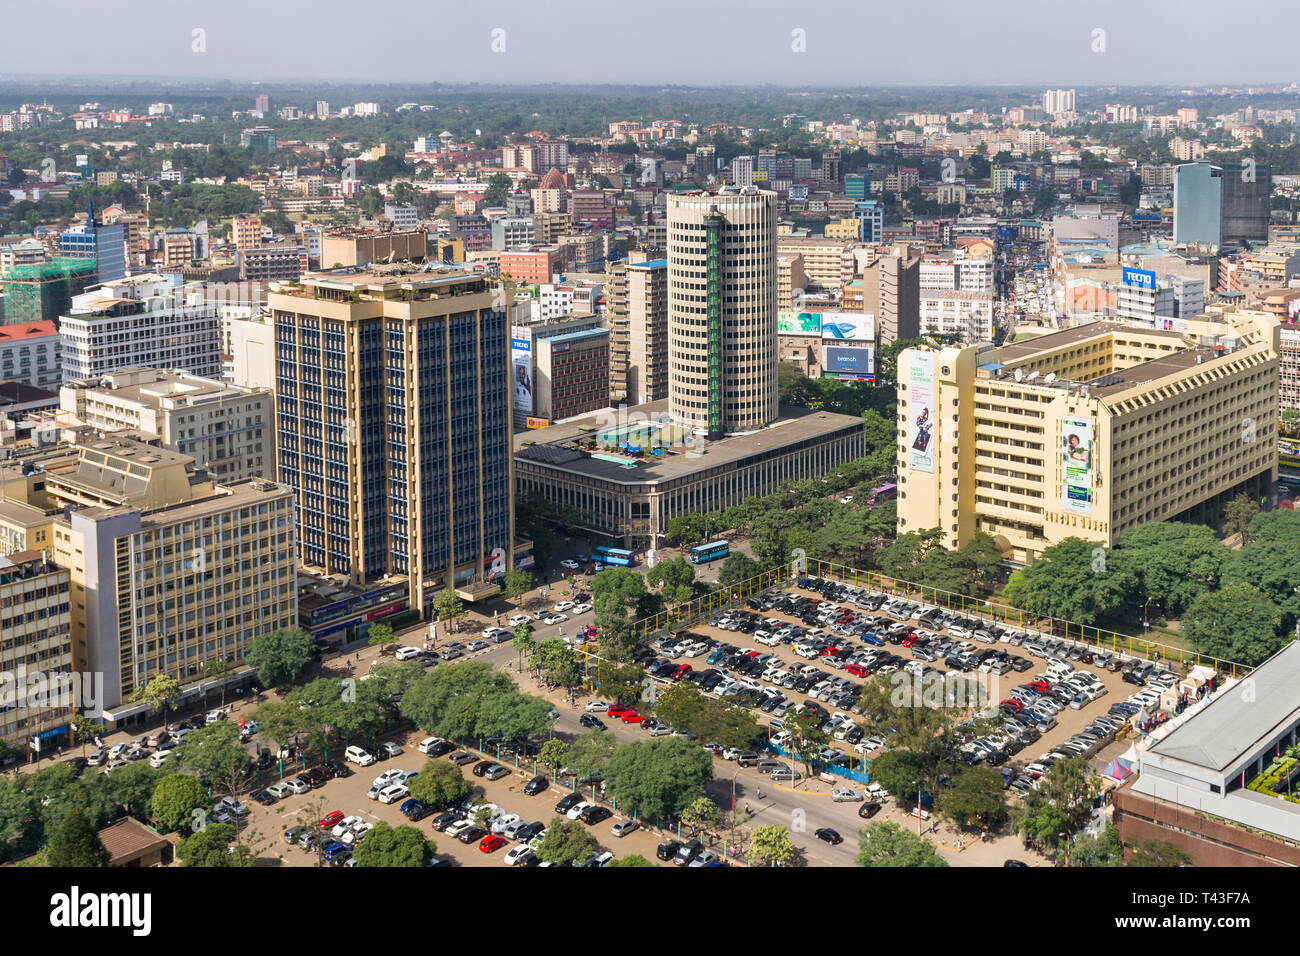 The Hilton Nairobi hotel building and Central Business District (CBD), Nairobi, Kenya Stock Photo